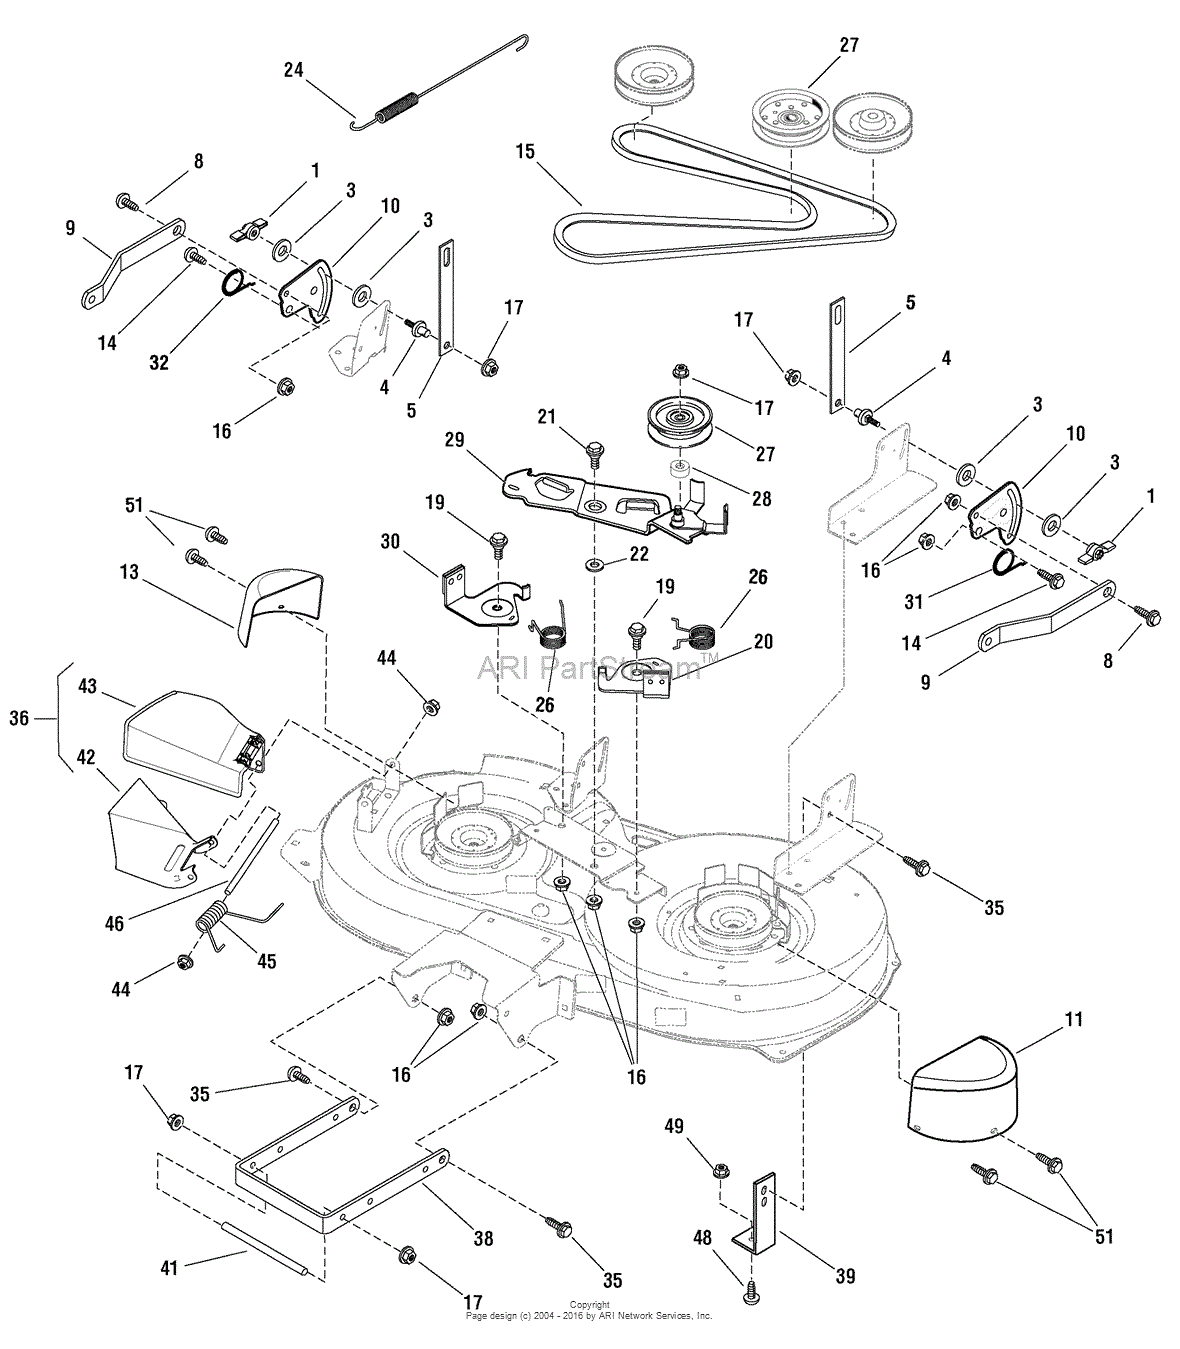 31 Murray Riding Lawn Mower Parts Diagram